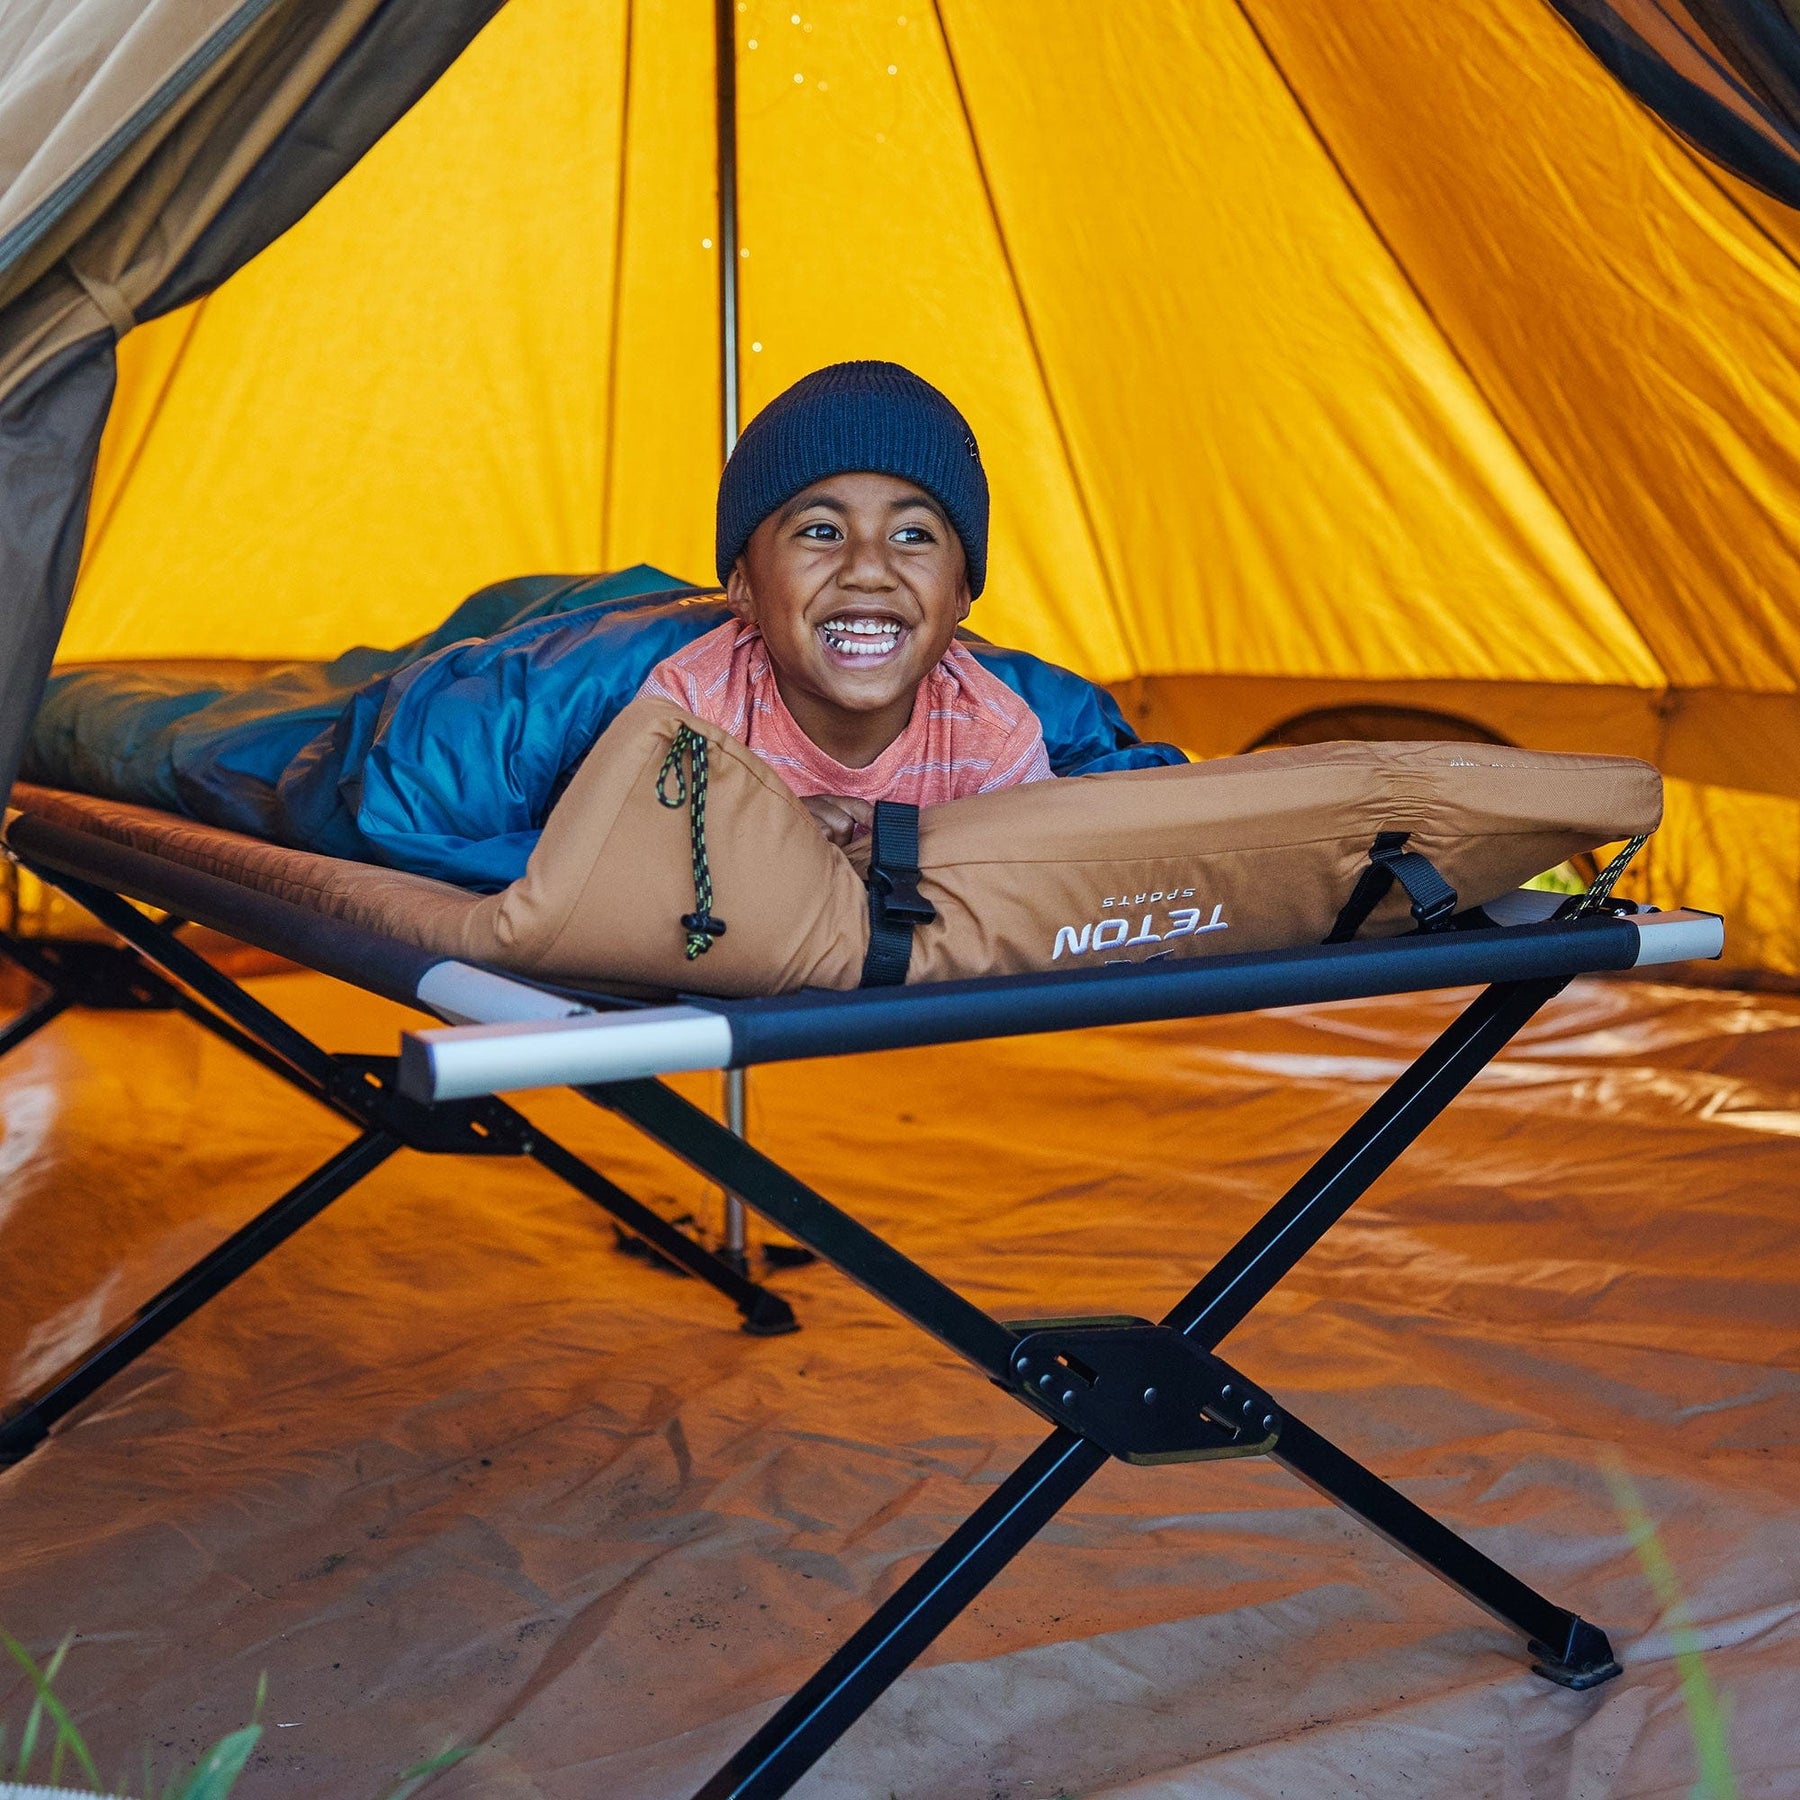 TETON Sports Adventurer Camp Cot Sleeping Pad